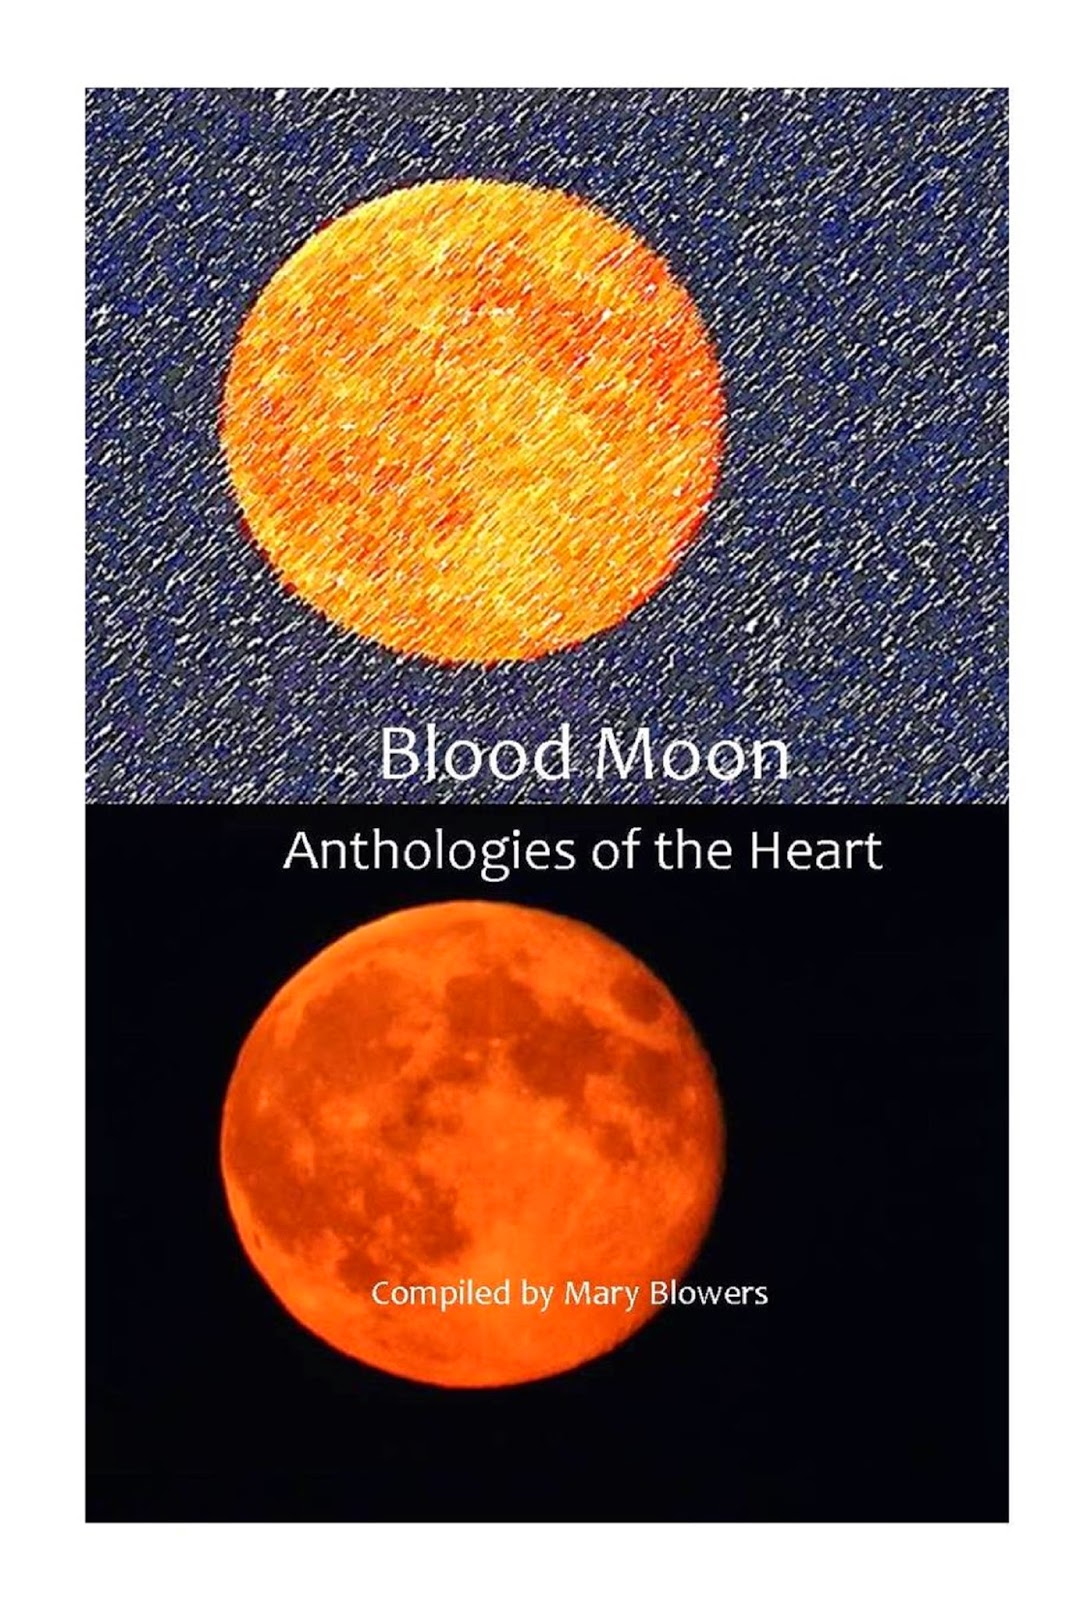 Blood Moon, Mary Blowers, anthology